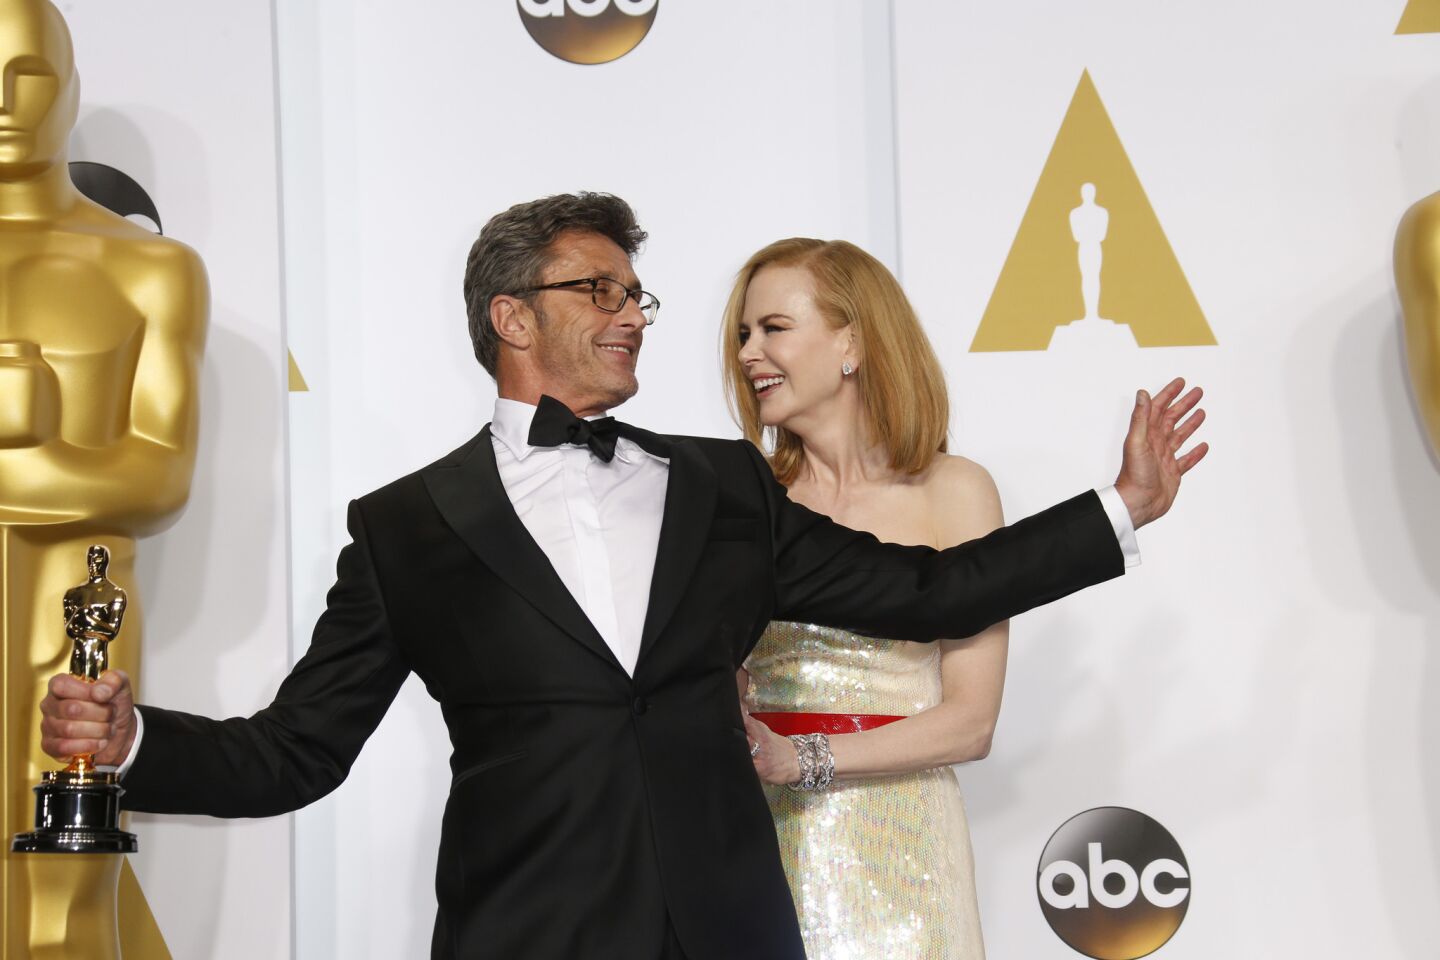 Oscars 2015 winners' room | Pawel Pawlikowski and presenter Nicole Kidman